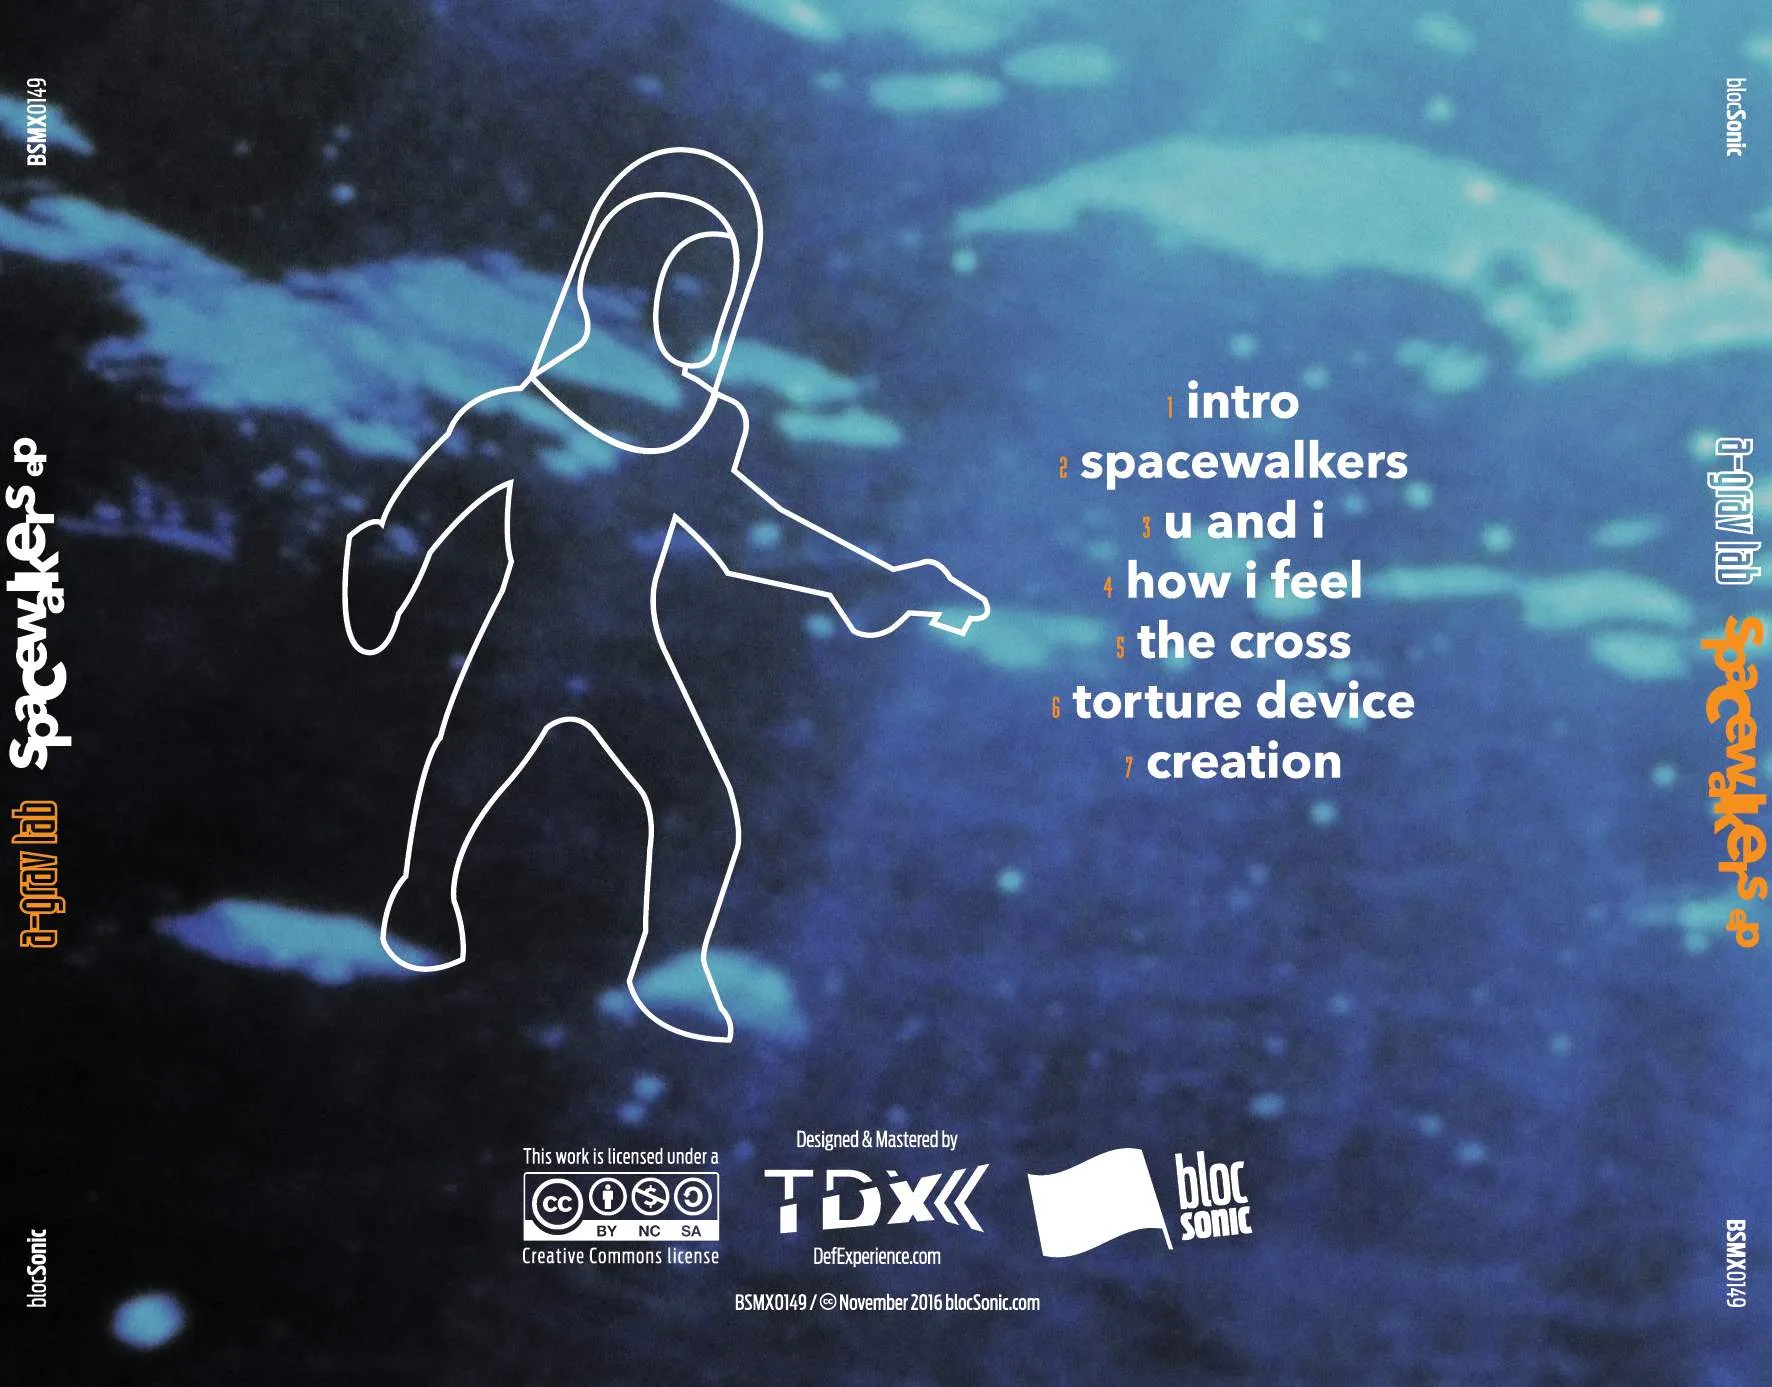 Album traycard for “Spacewalkers EP” by A-Grav Lab